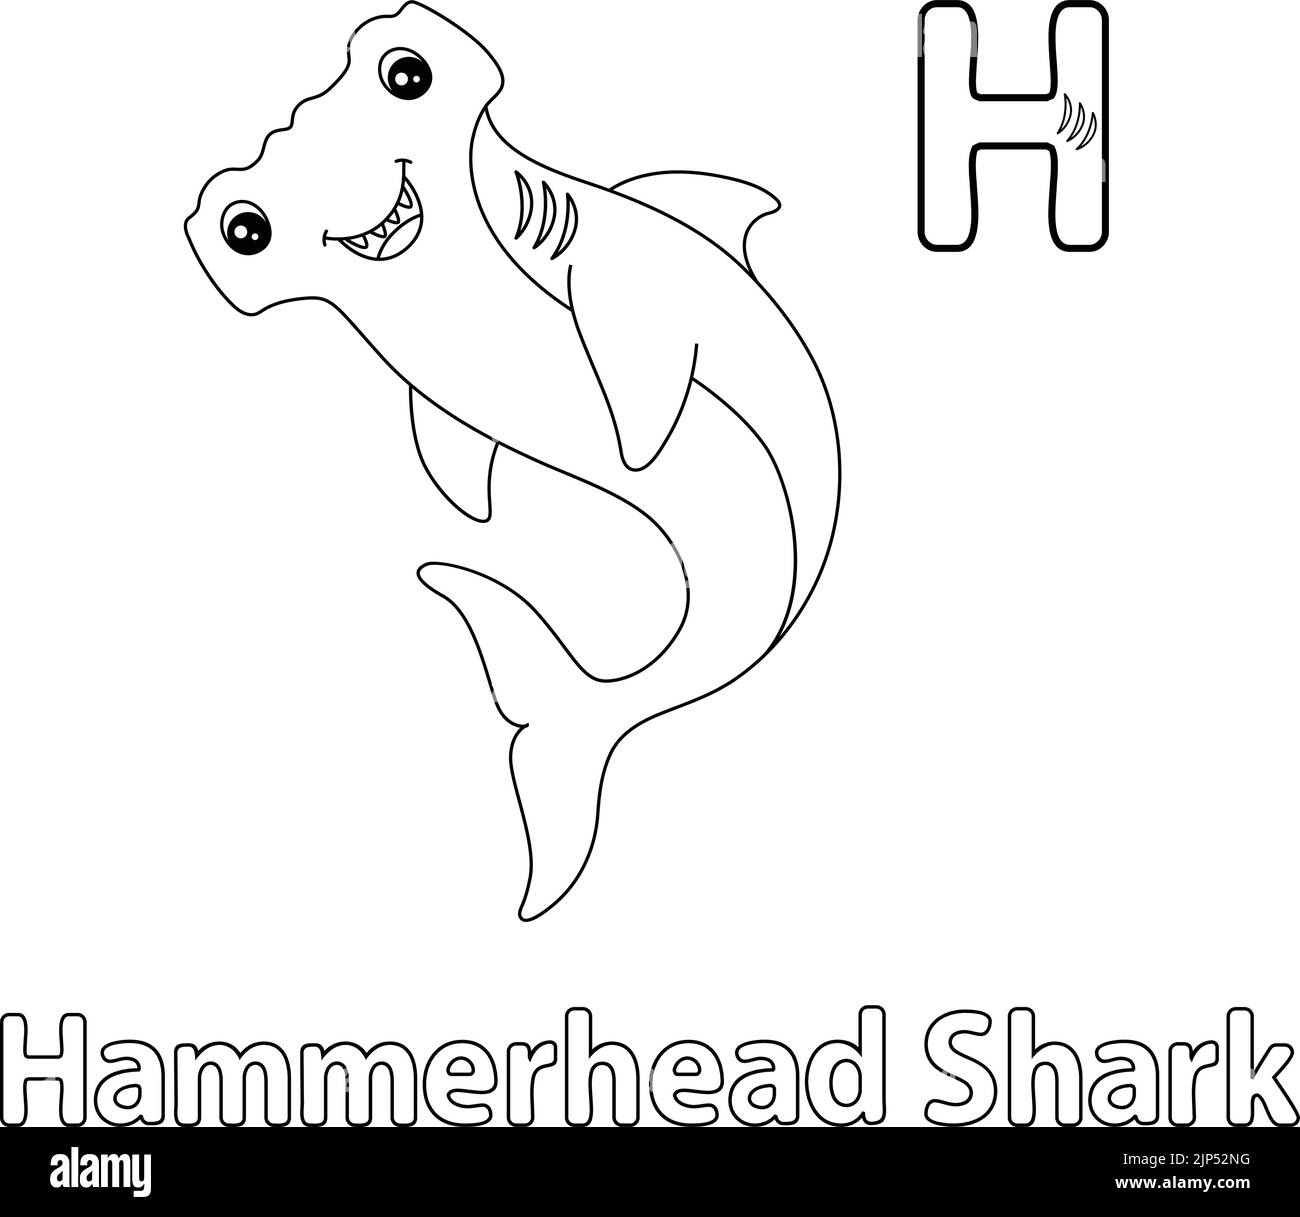 Hammerhead Shark Alphabet ABC Coloring Page H Stock Vector